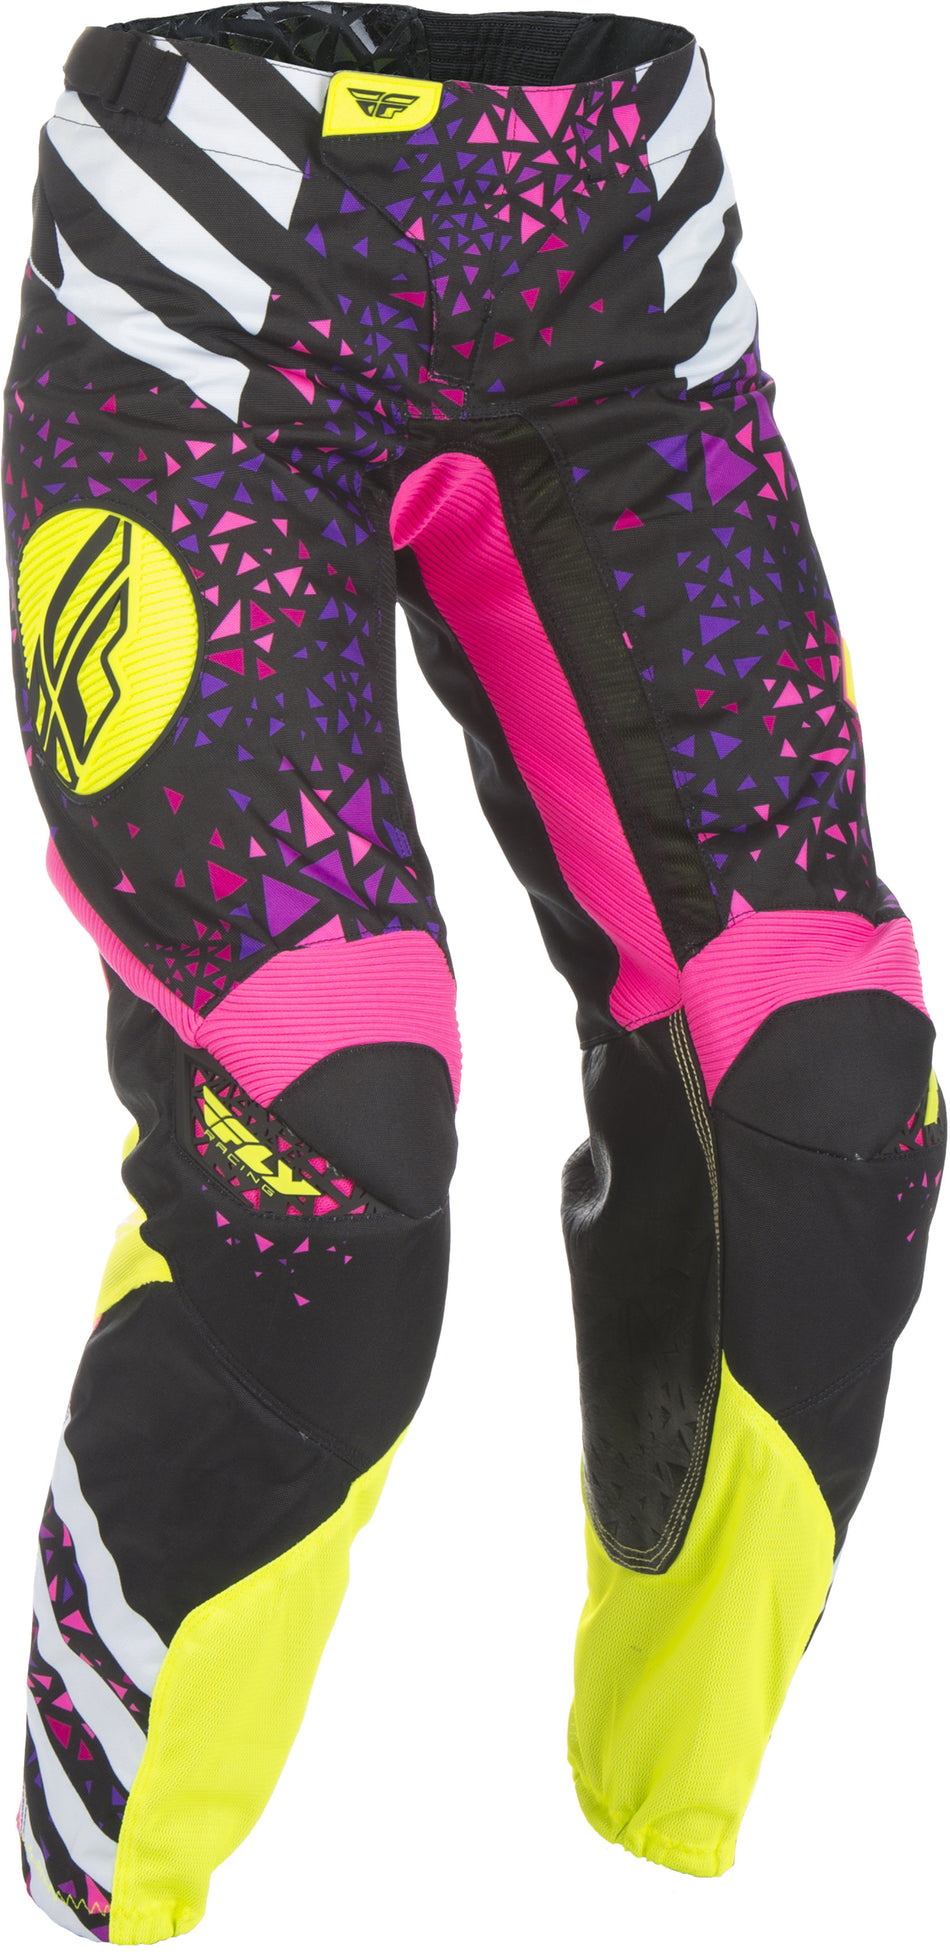 FLY RACING Kinetic Women's Race Pants Neon/Pink/Hi-Vis Sz 7/8 371-63907